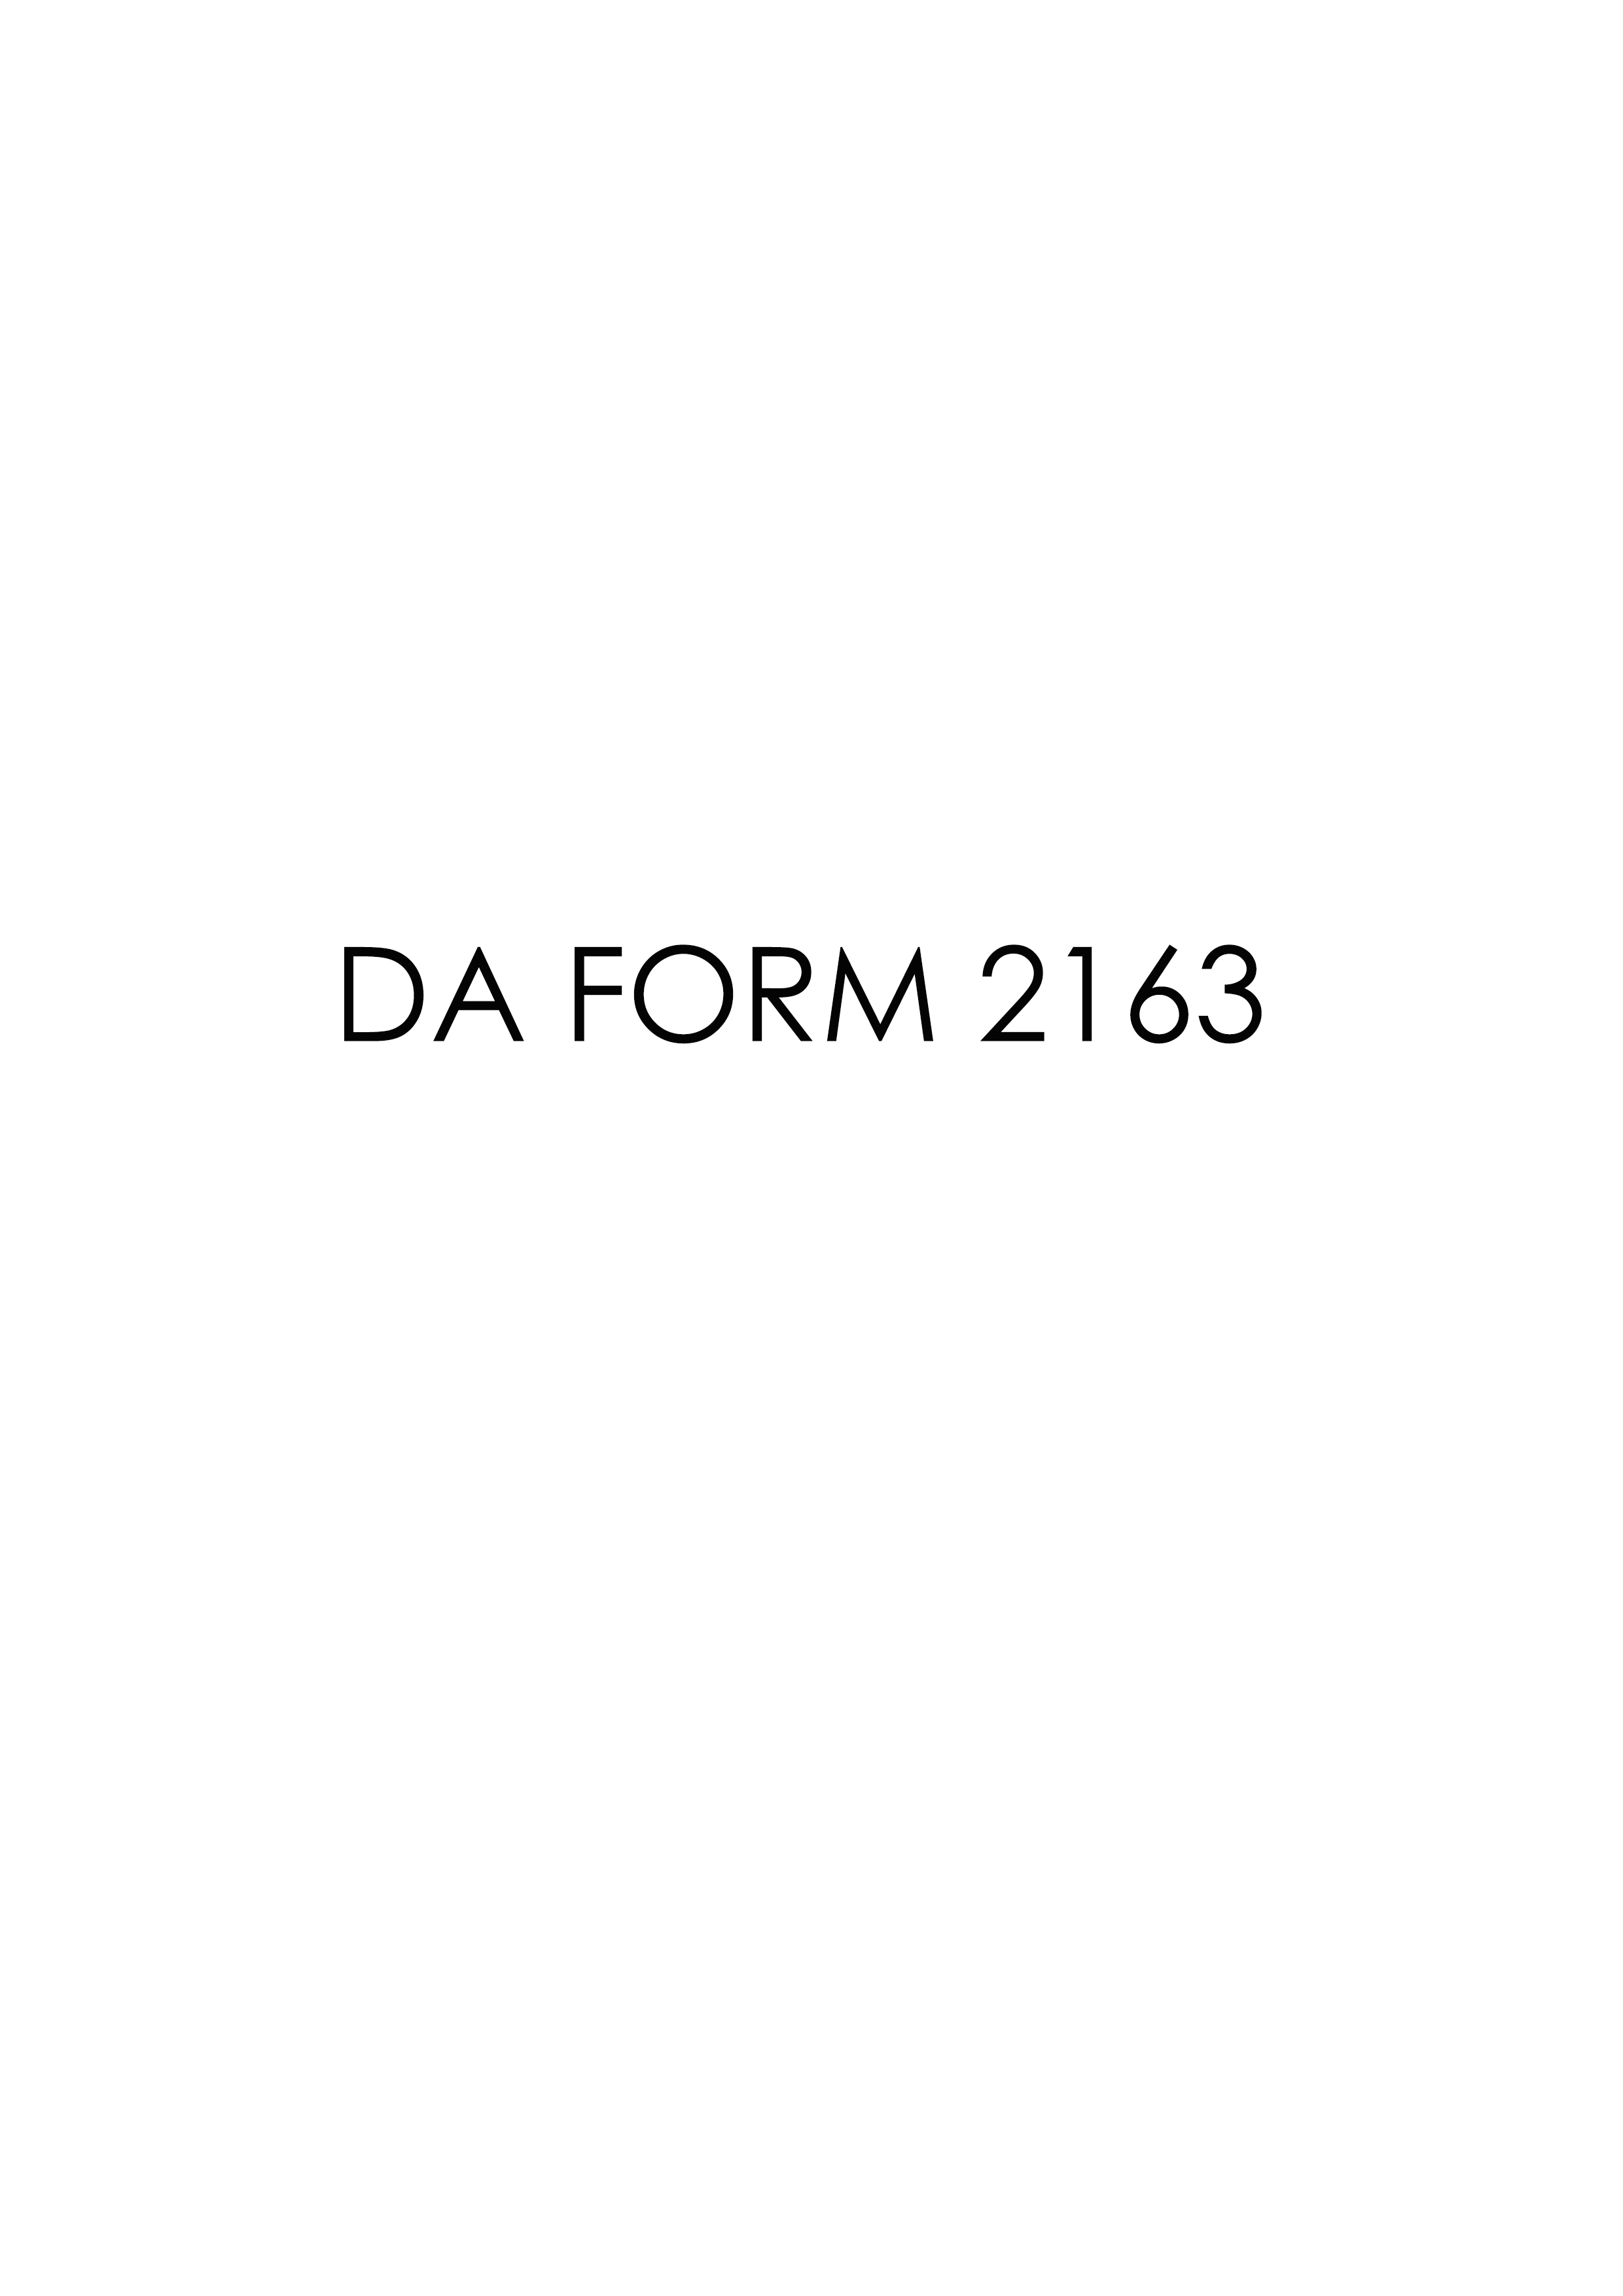 Download da Form 2163